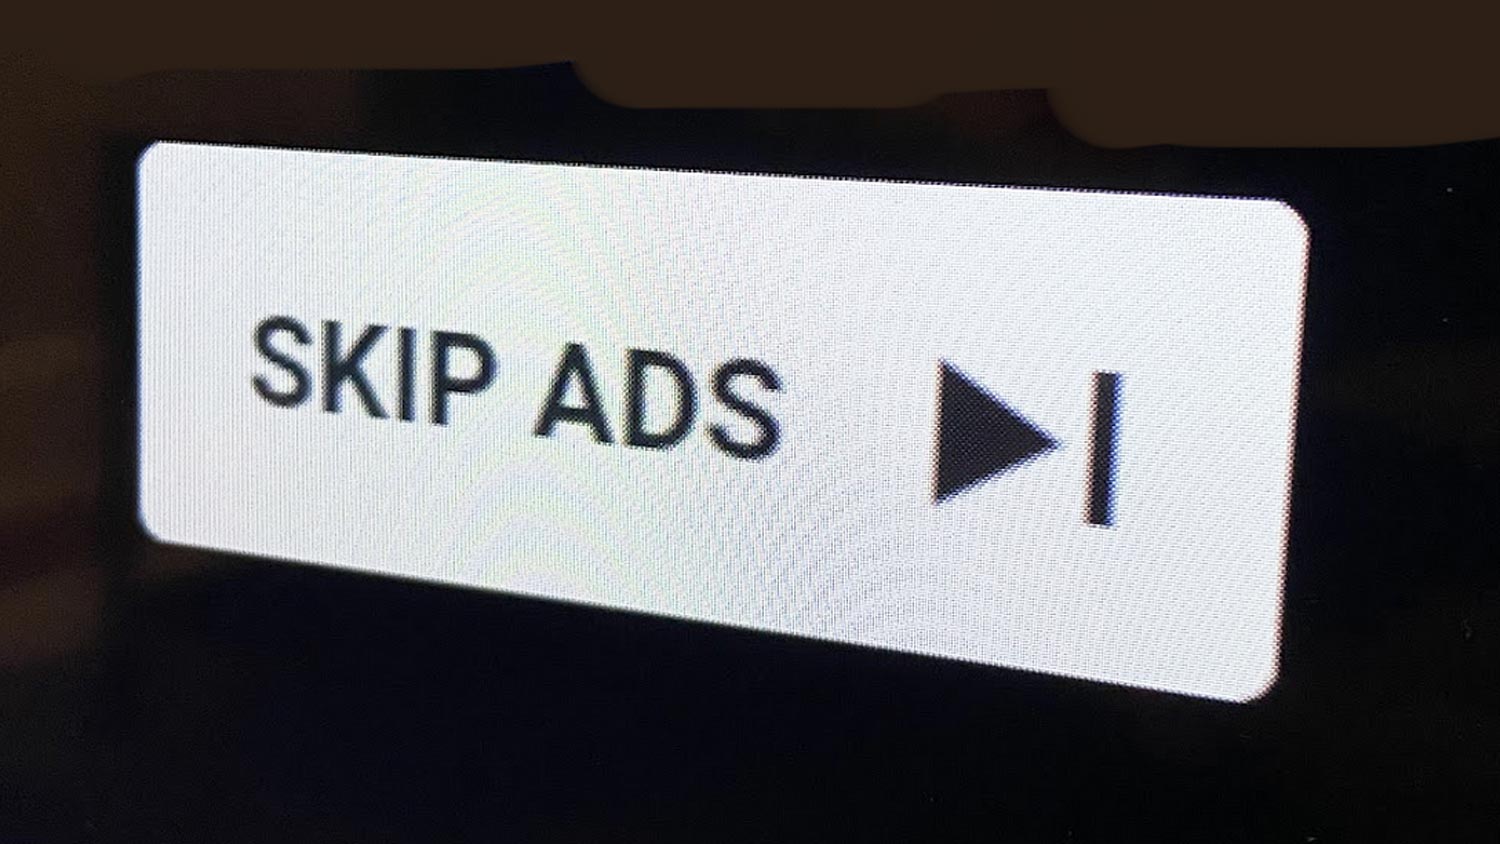 YouTube Menguji Butang “Skip Ads” Yang Lebih Tersembunyi